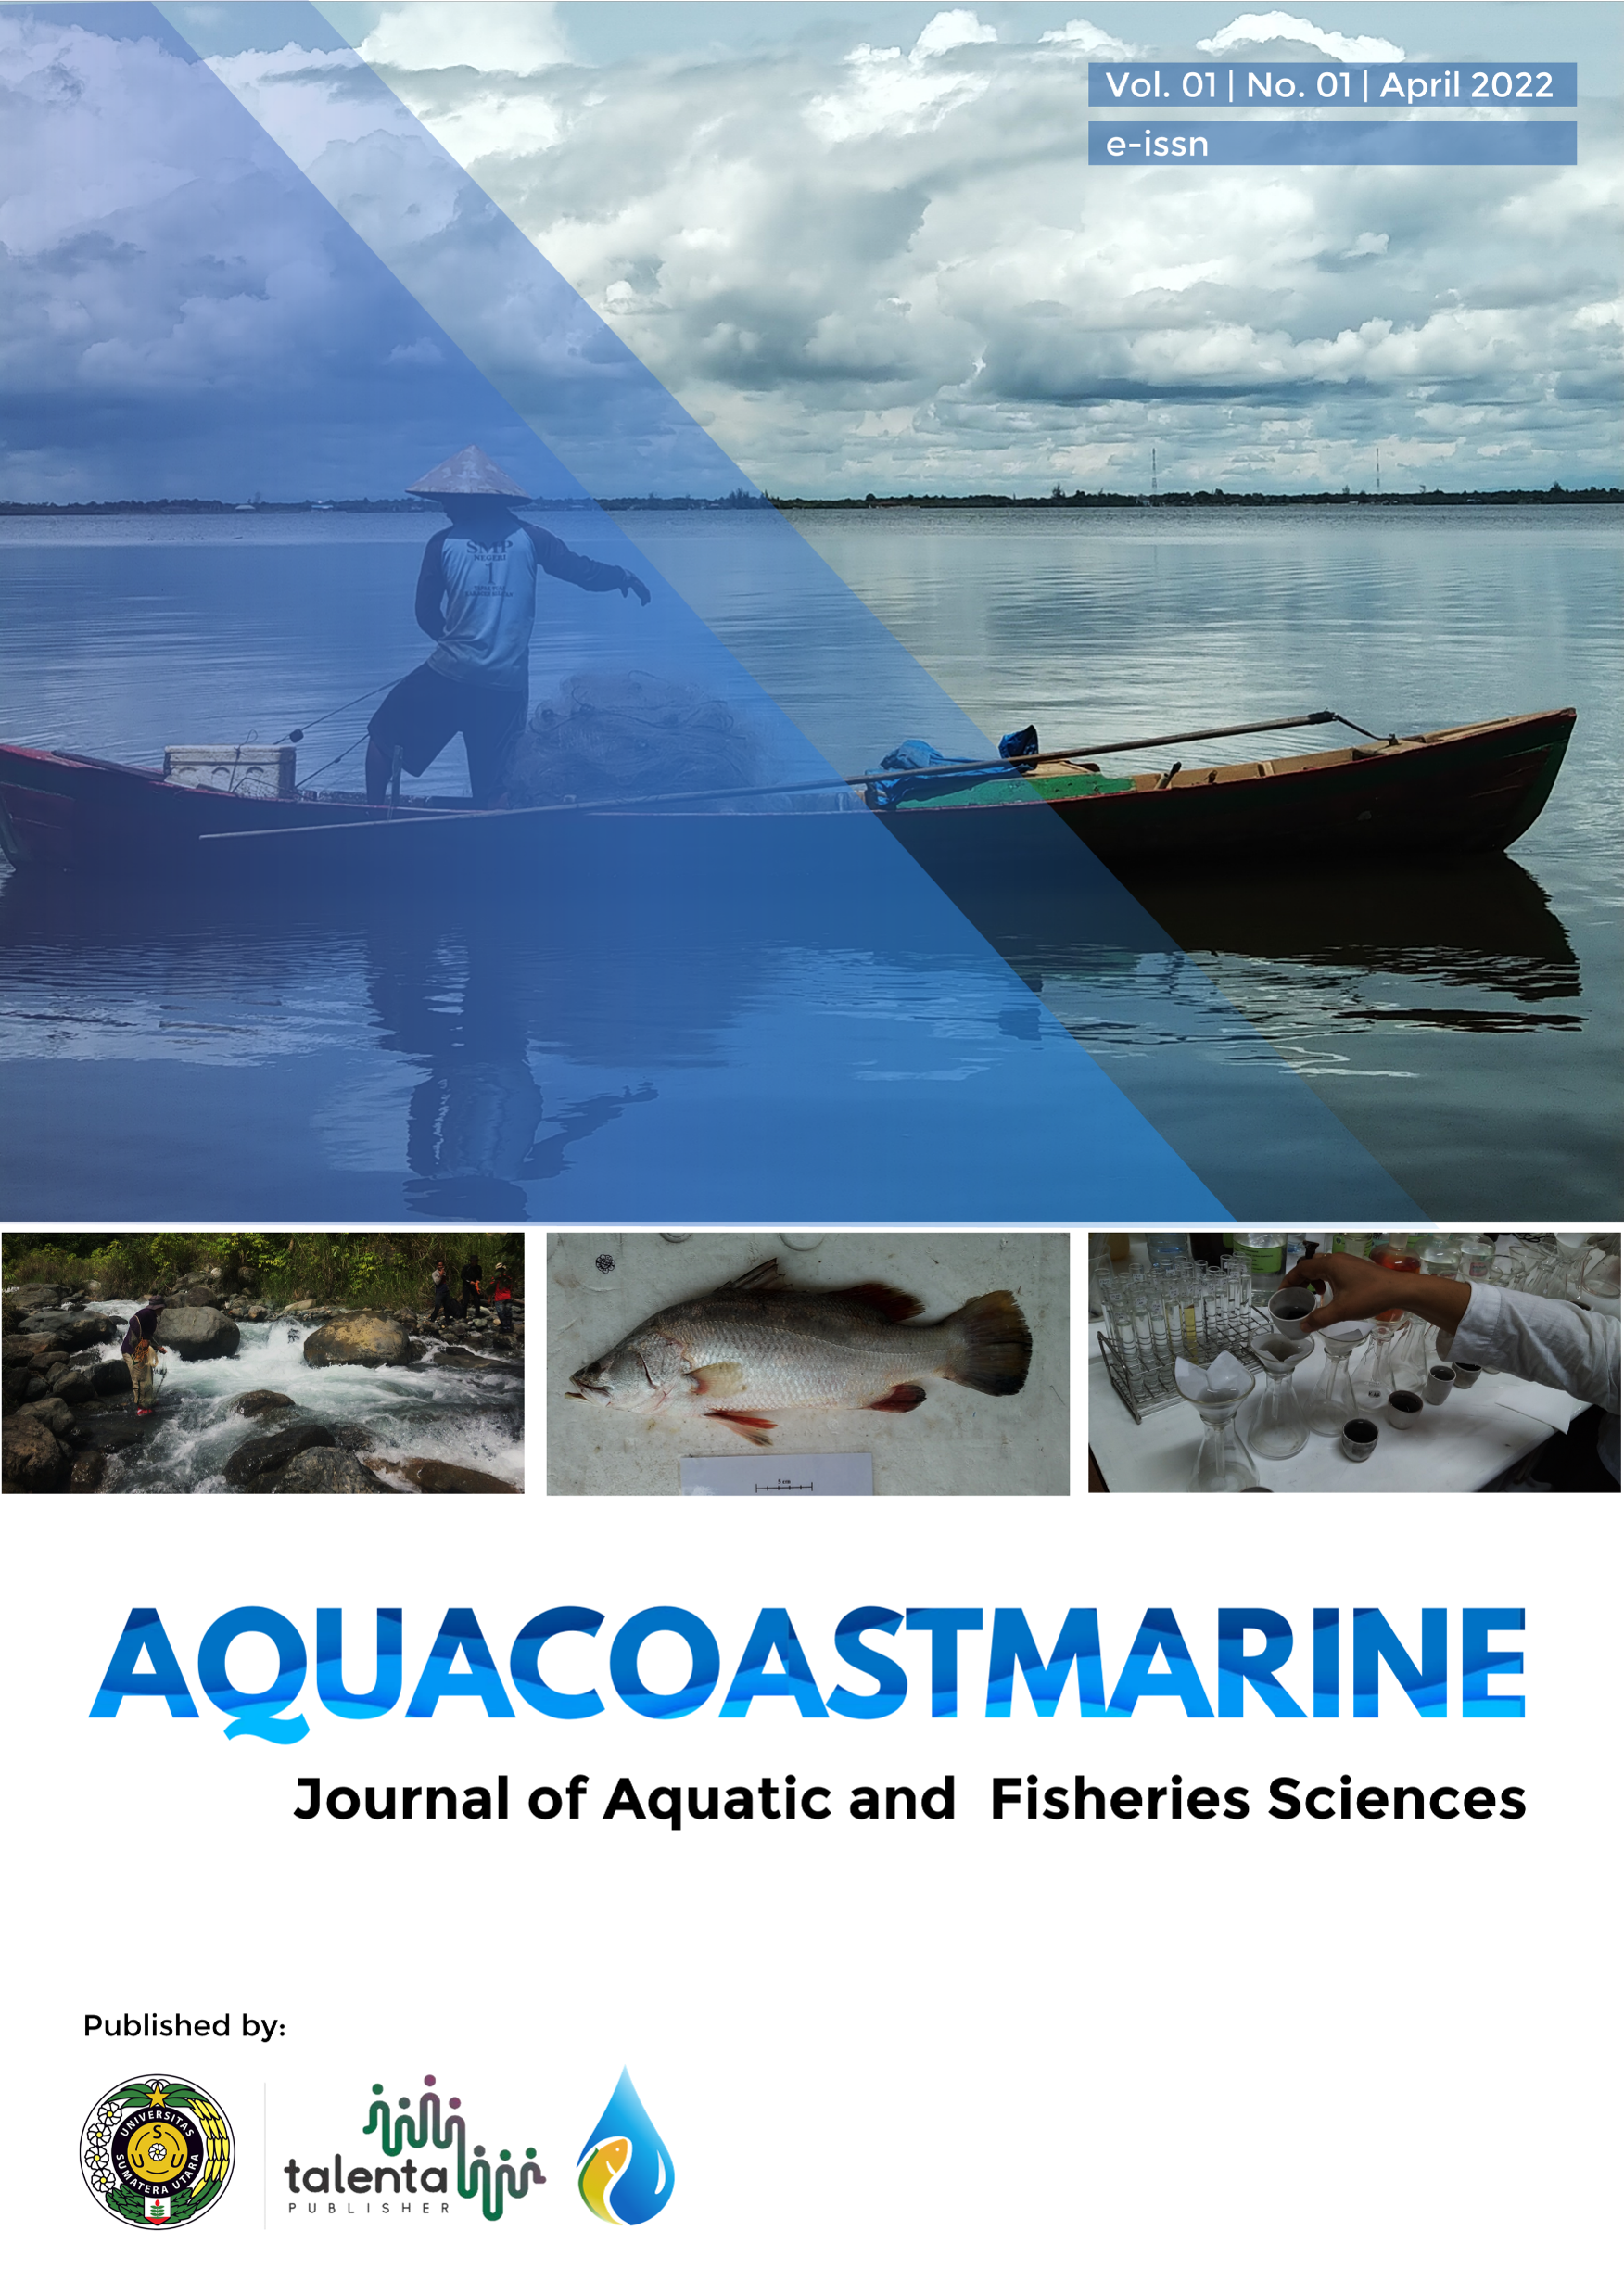 AQUACOASTMARINE: Journal of Aquatic and Fisheries Sciences